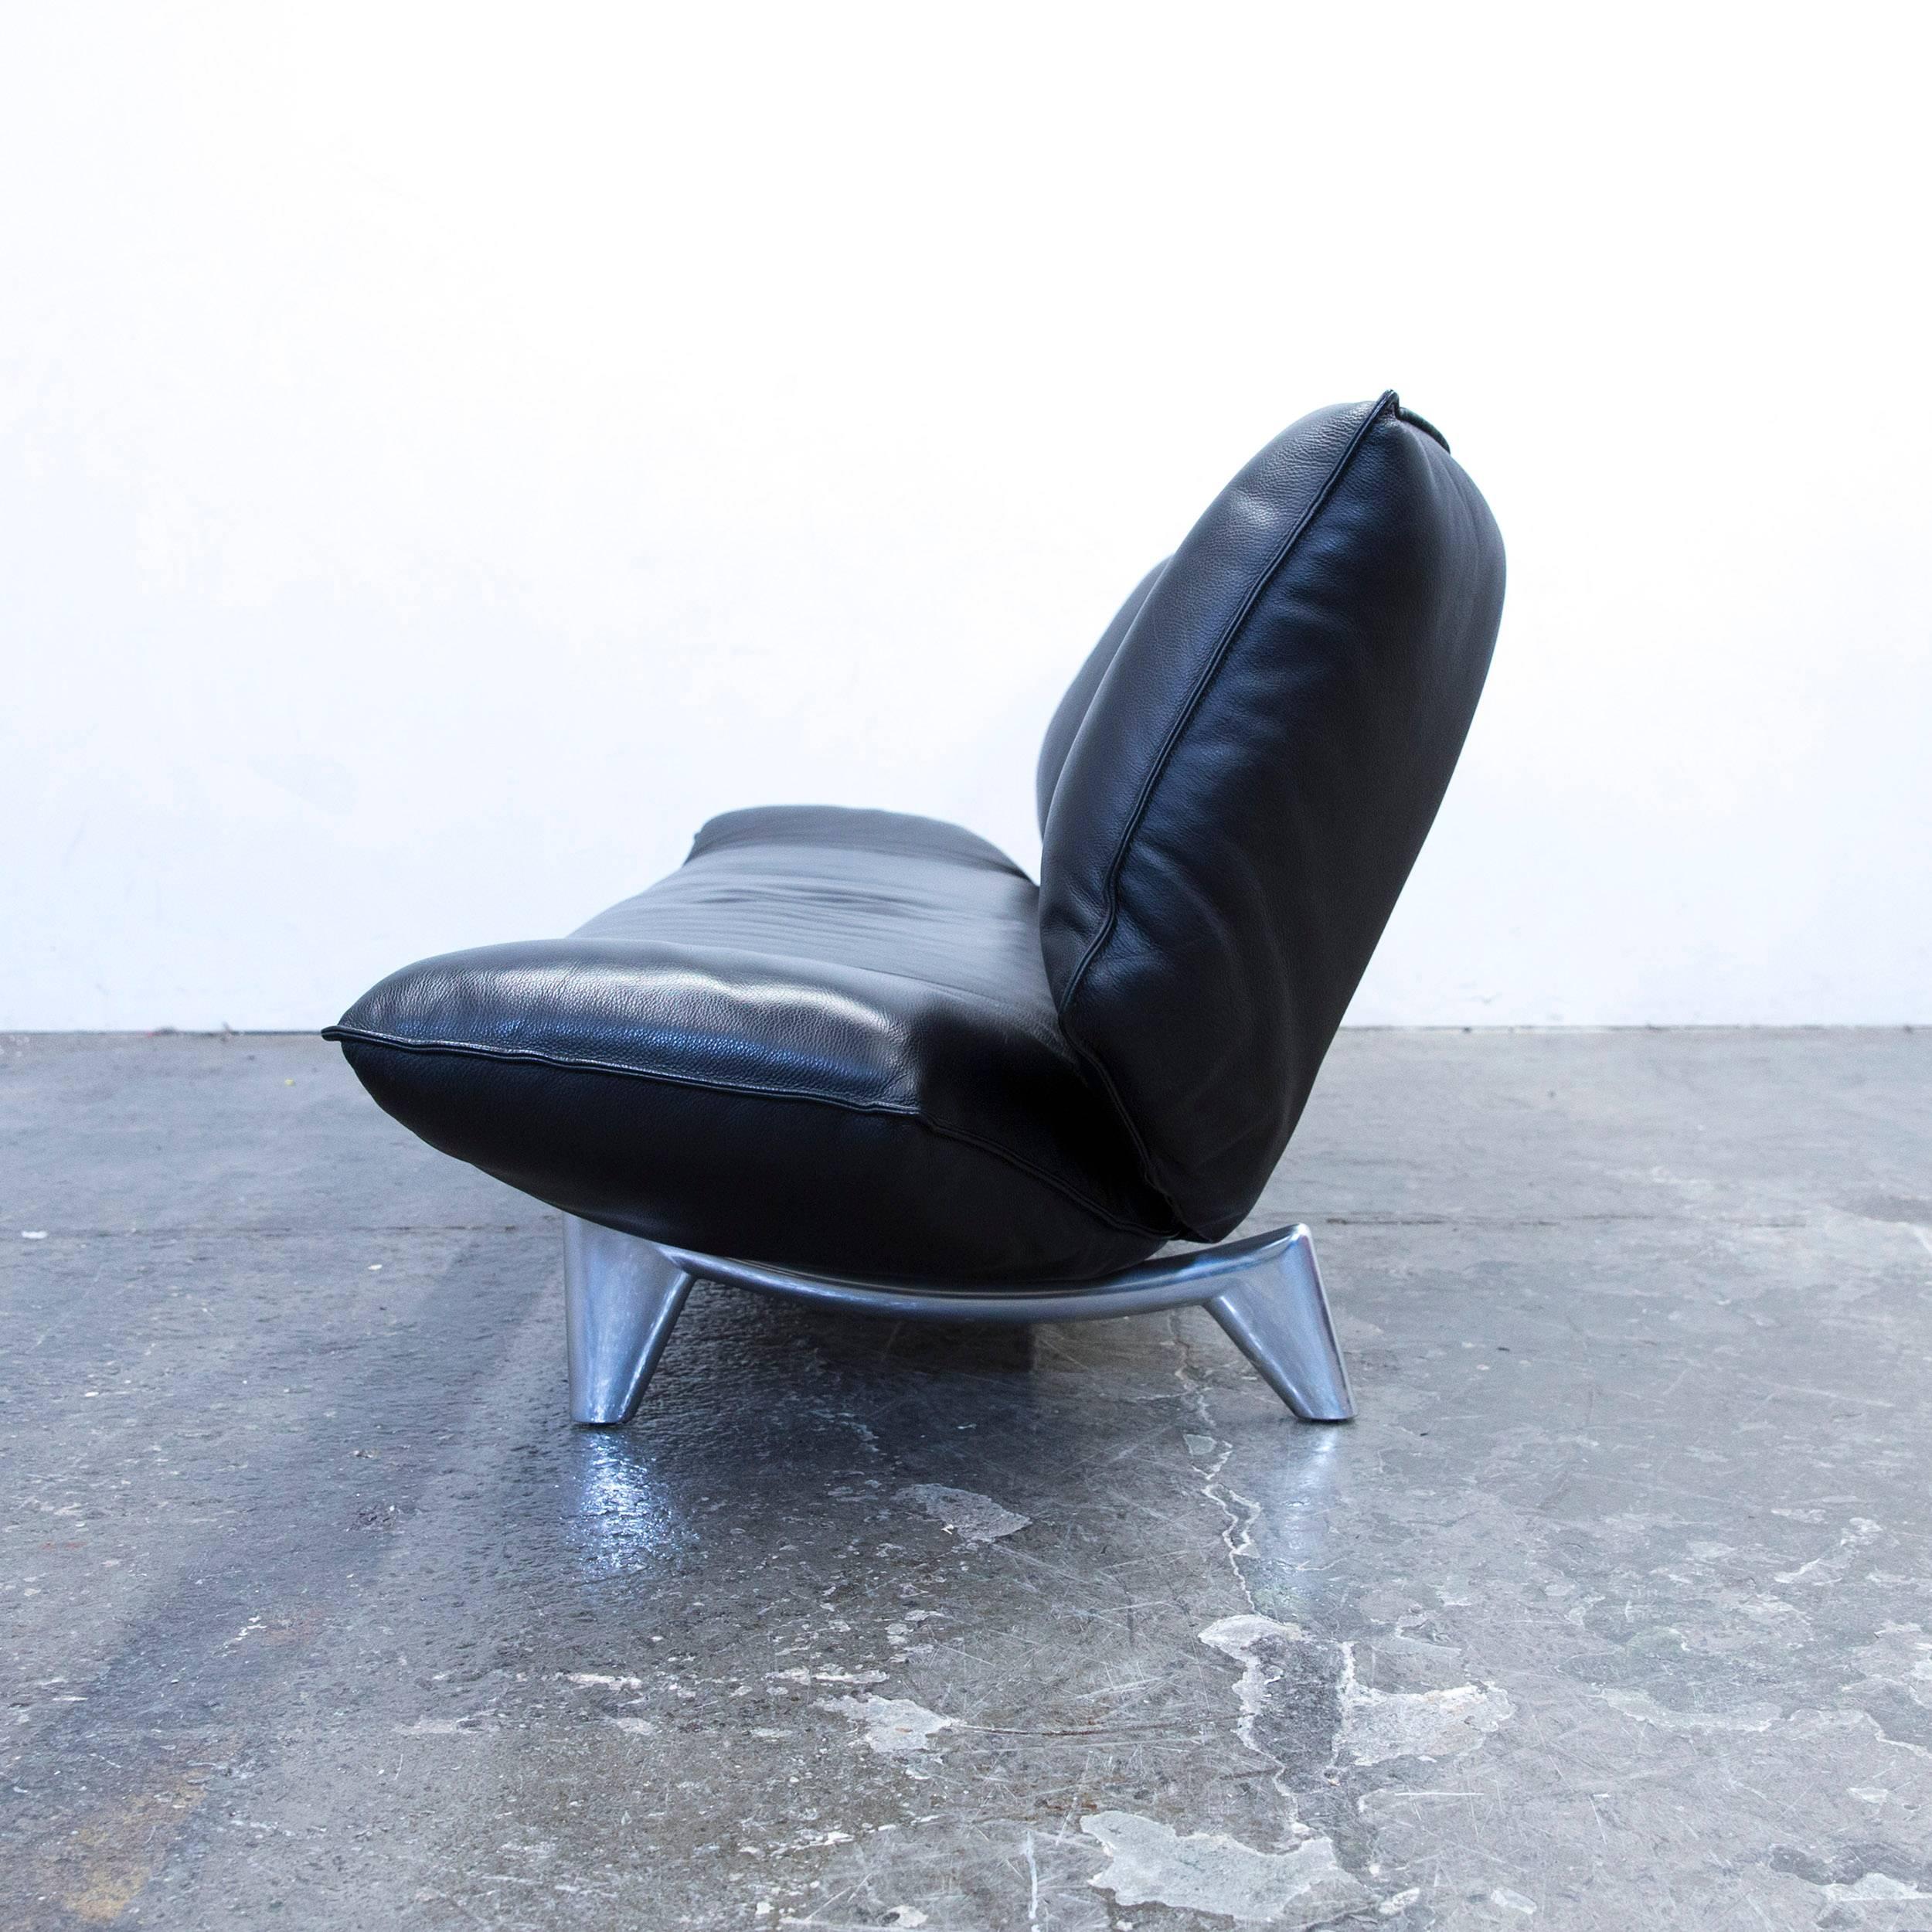 Leolux Tango Designer Leather Sofa Black Two-Seat Function Modern For Sale 4